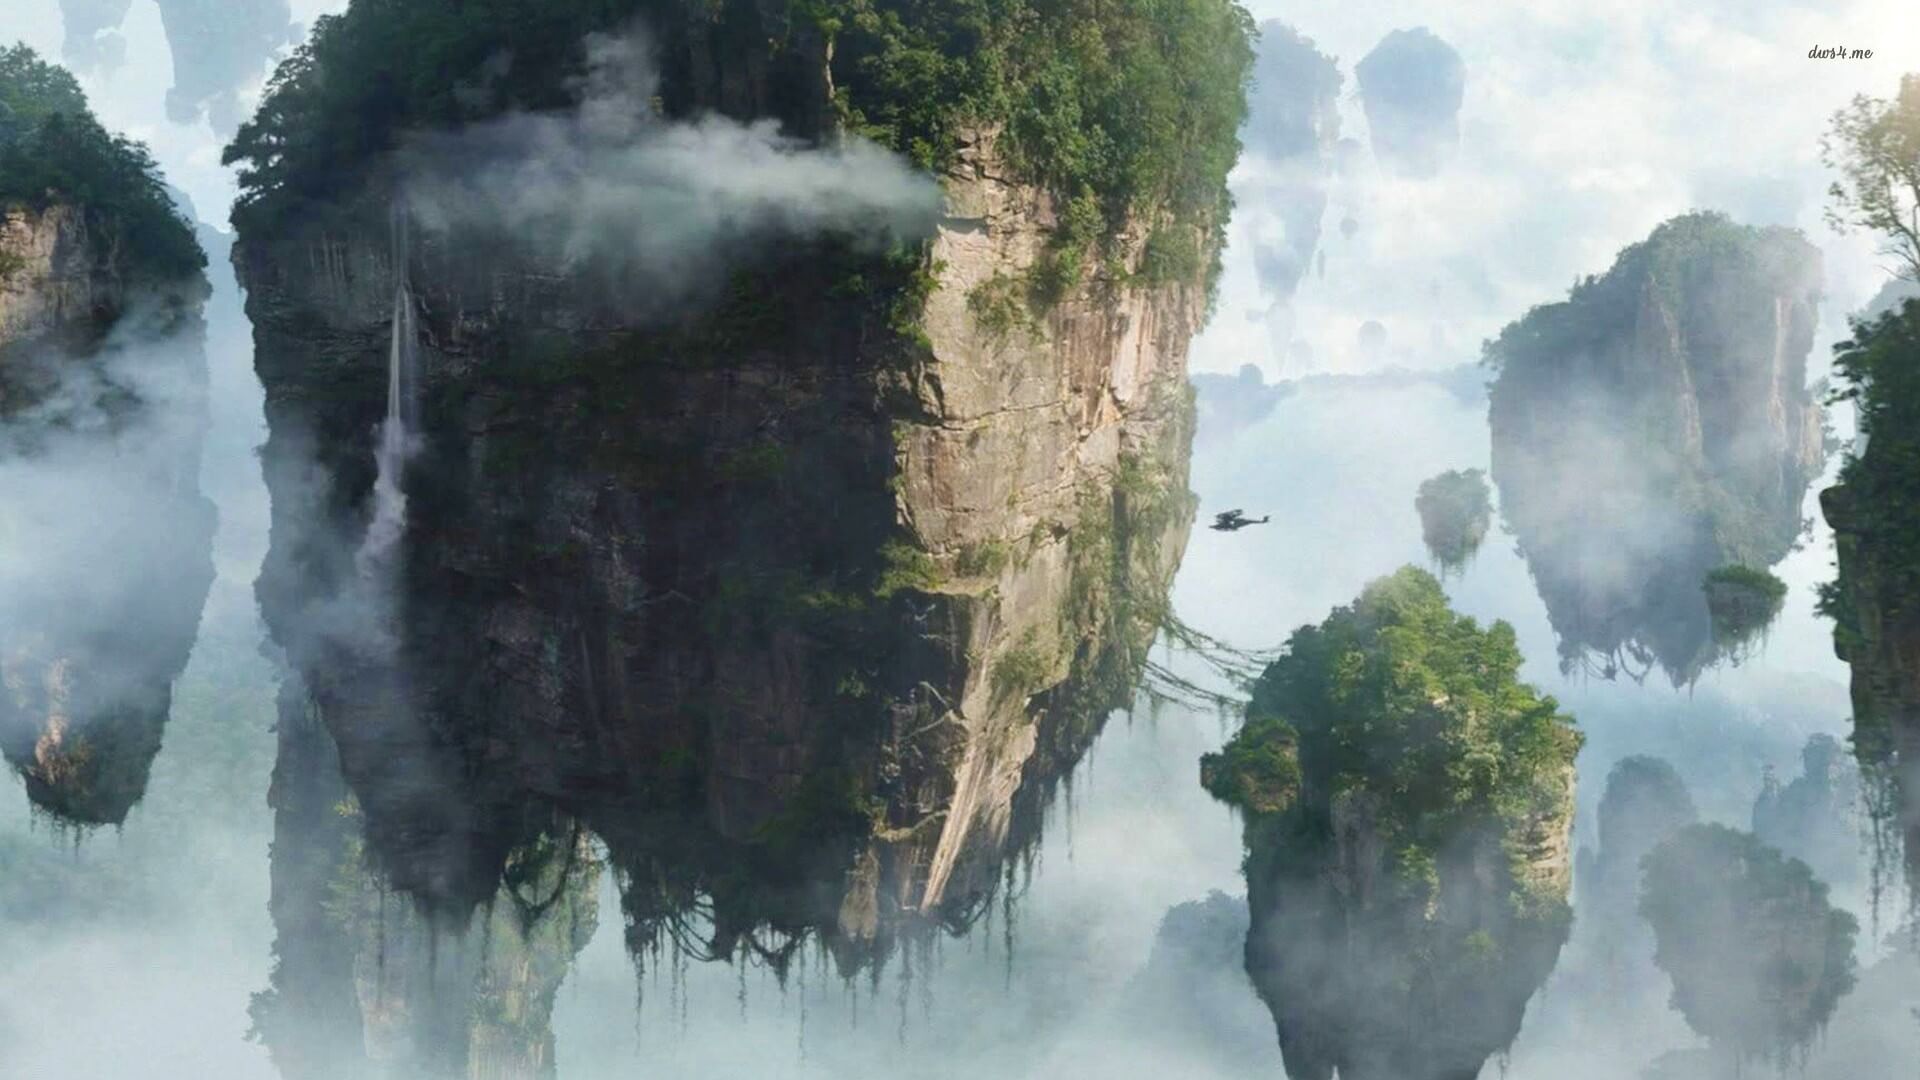 Volumetric clouds in the movie Avatar